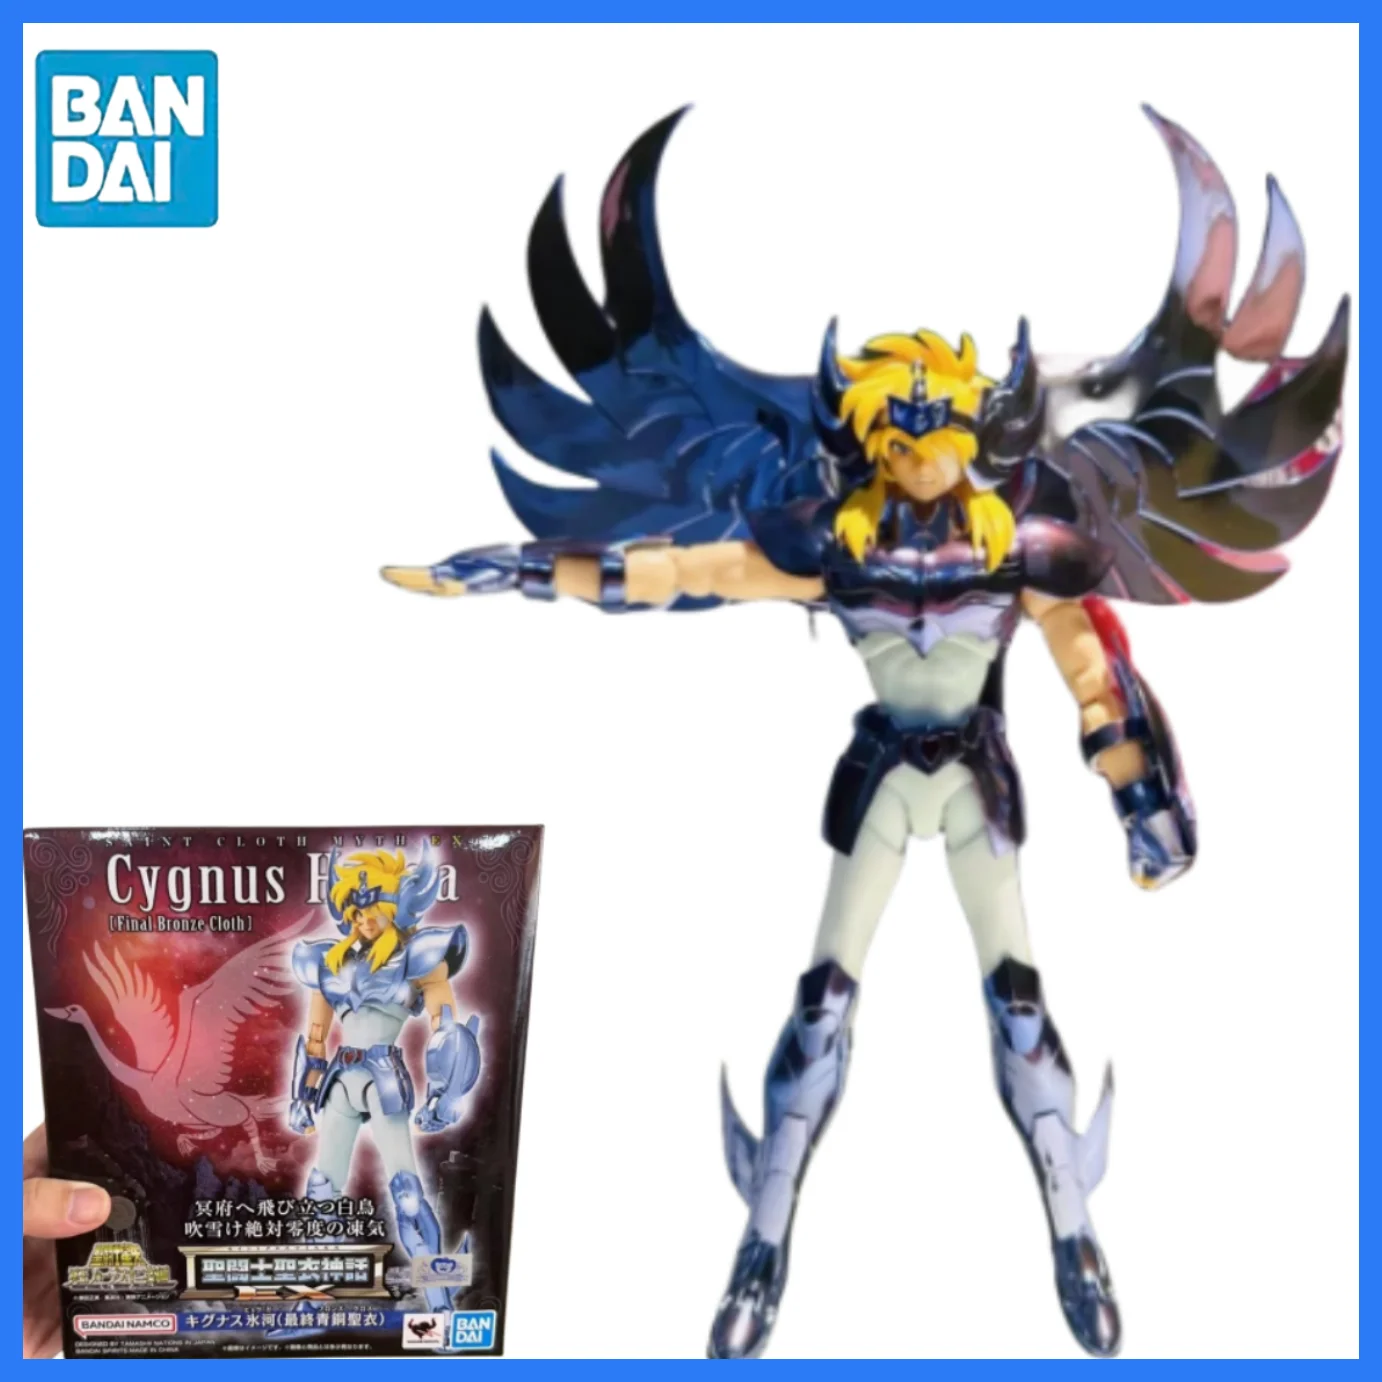 

Original Bandai Saint Seiya Cloth Myth Final Bronze Cloth Hyoga Cygnus V3 Ex Metal Armor Action Figure Models Collections Gifts